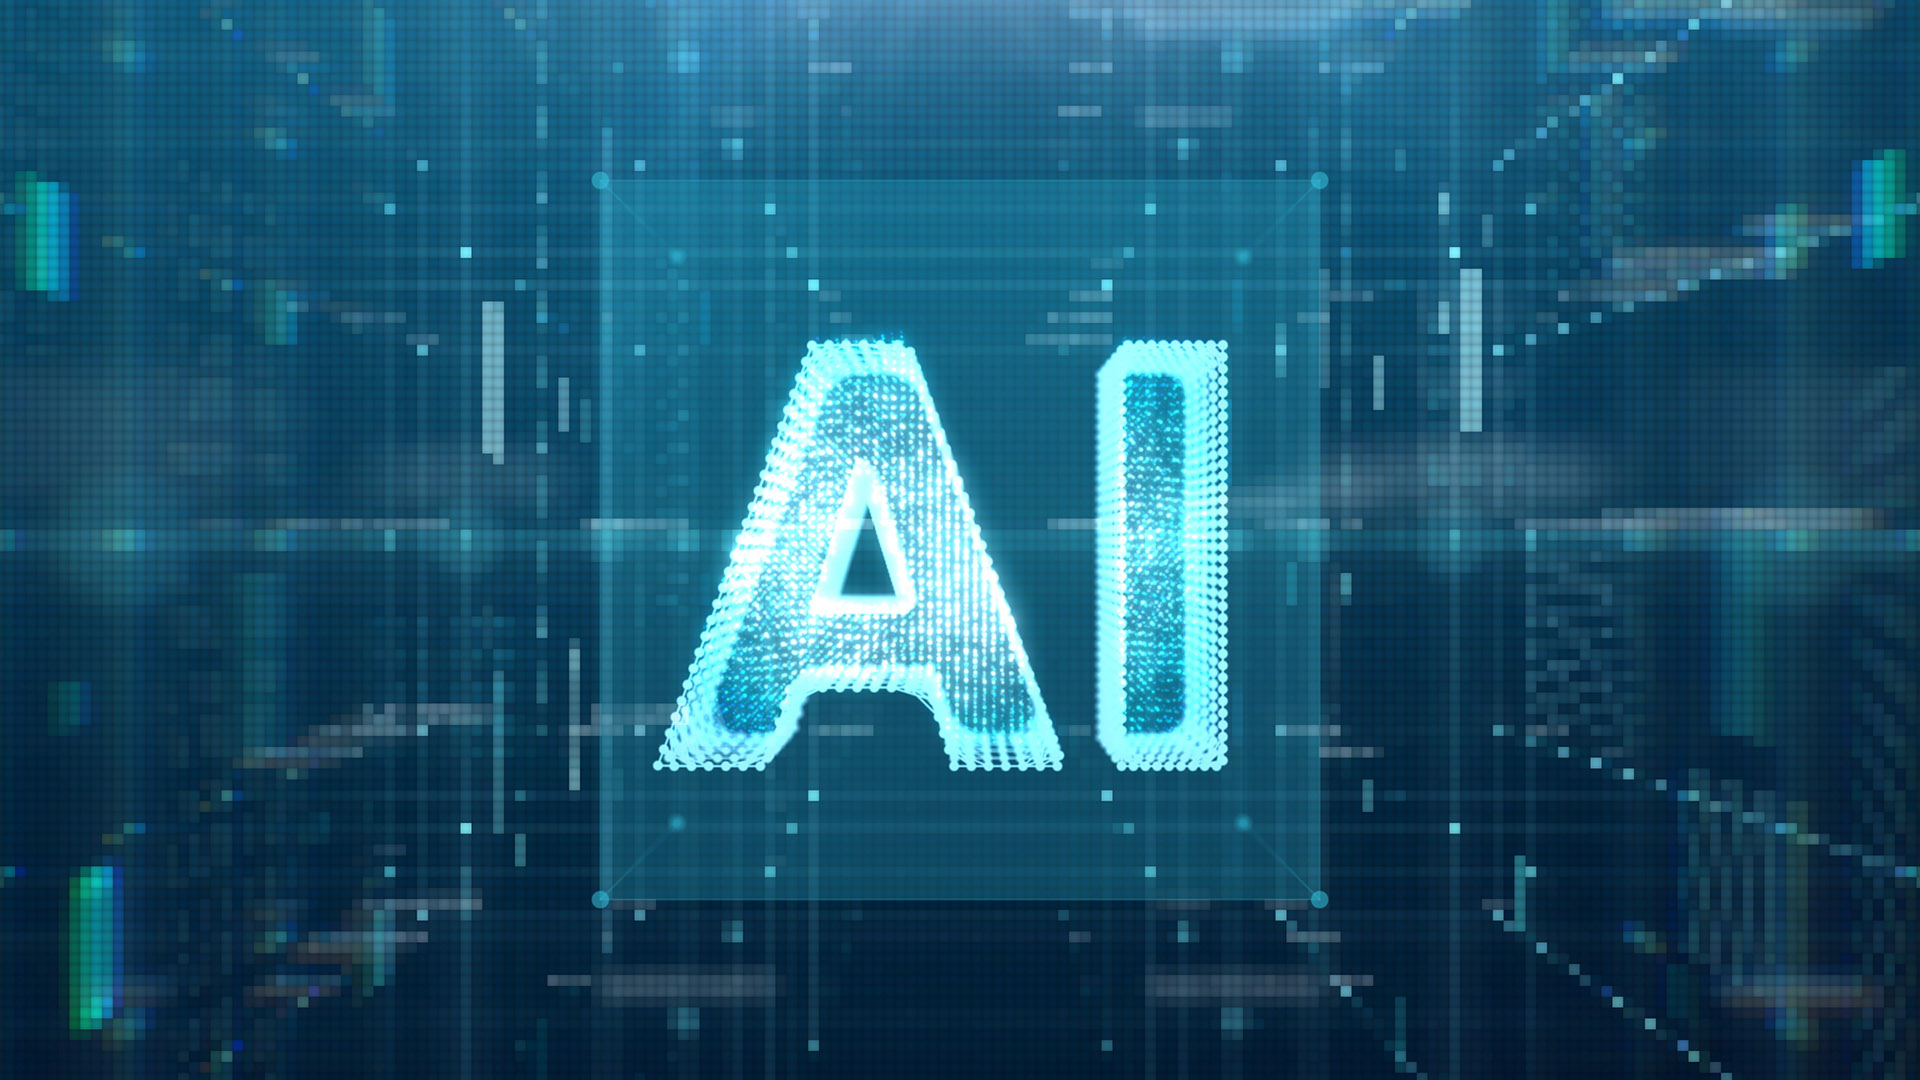 Digital representation of AI in a computer generated scene